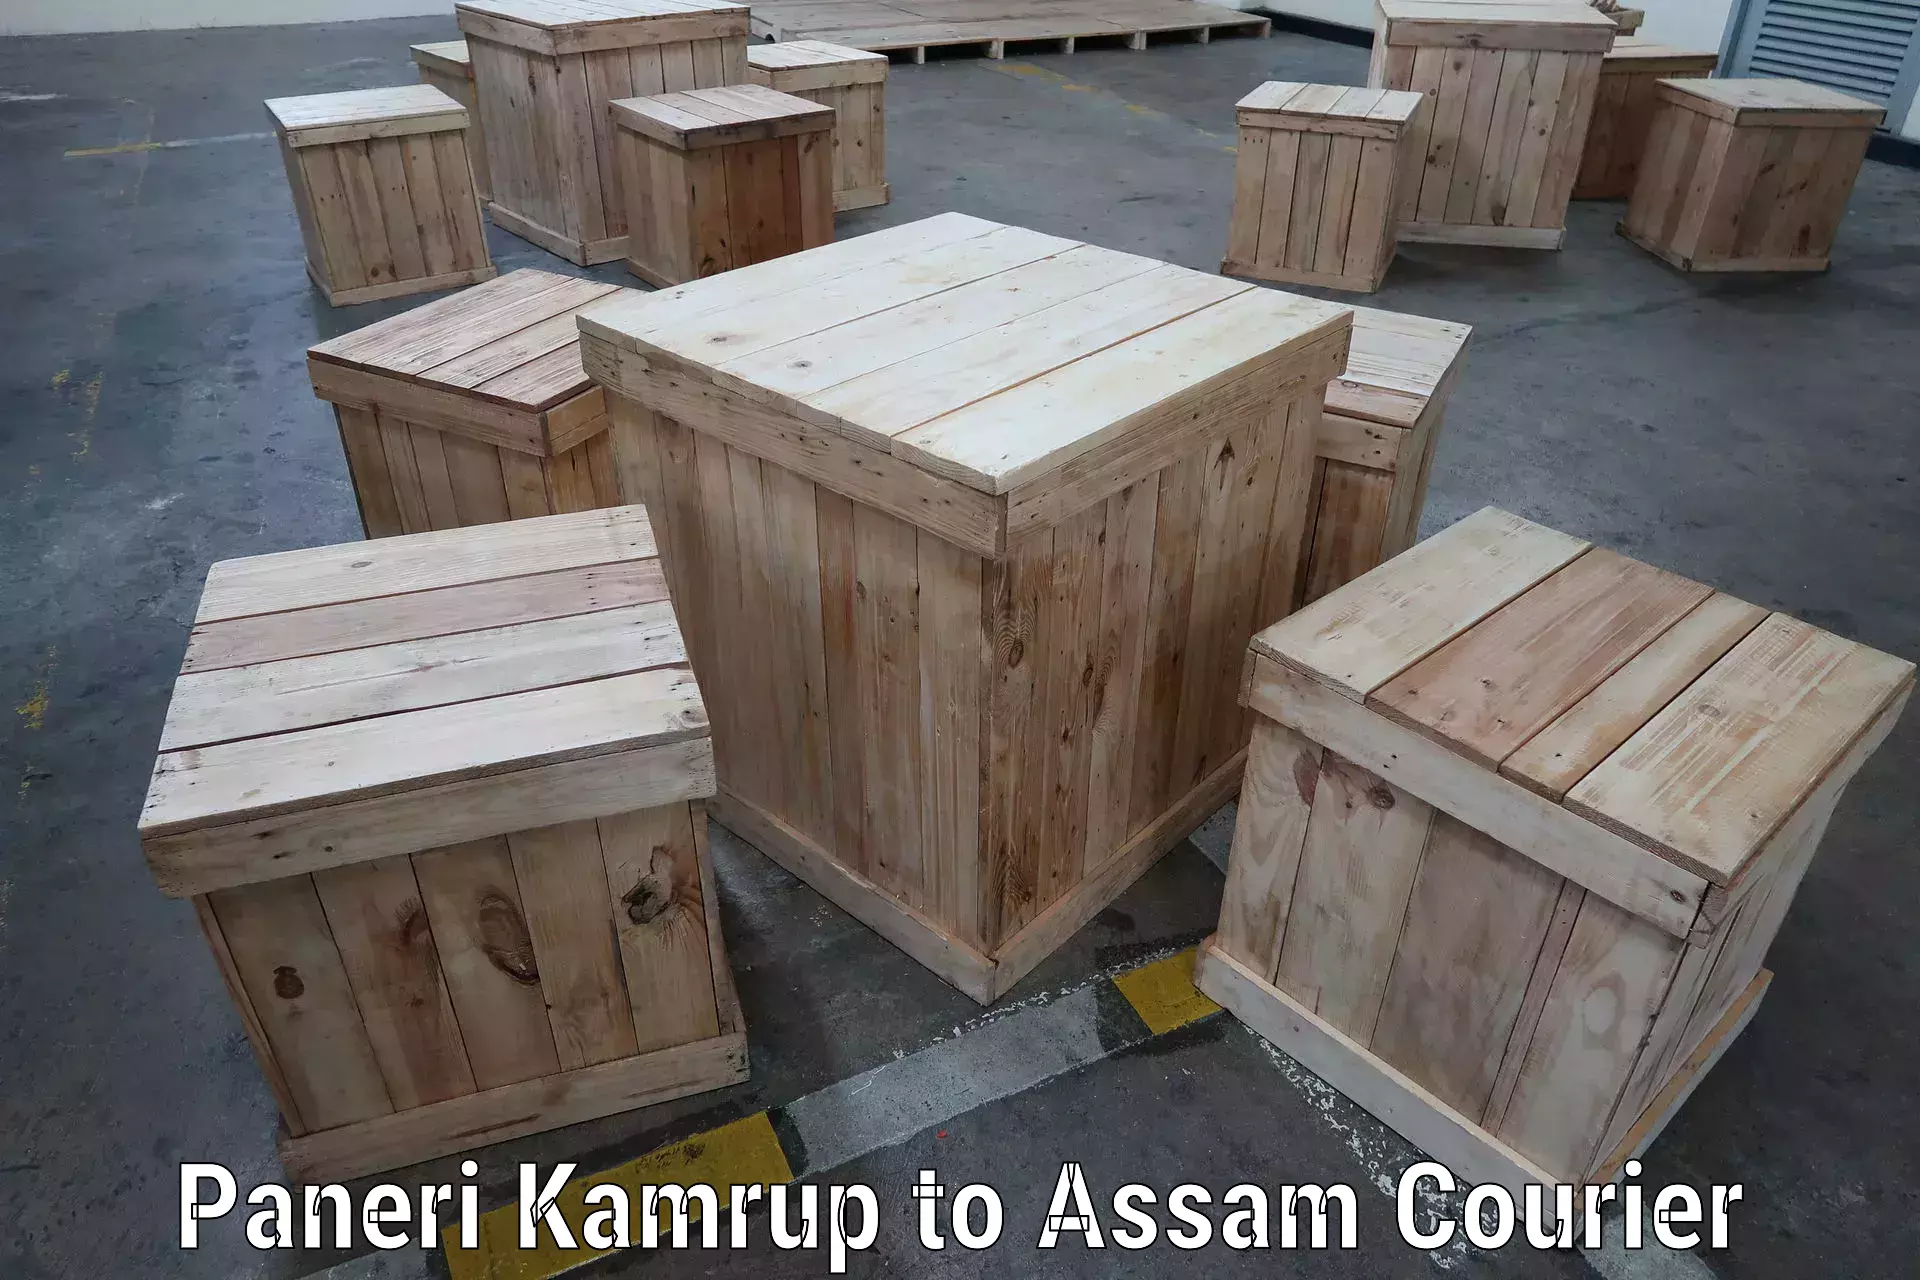 Supply chain efficiency Paneri Kamrup to Lala Assam